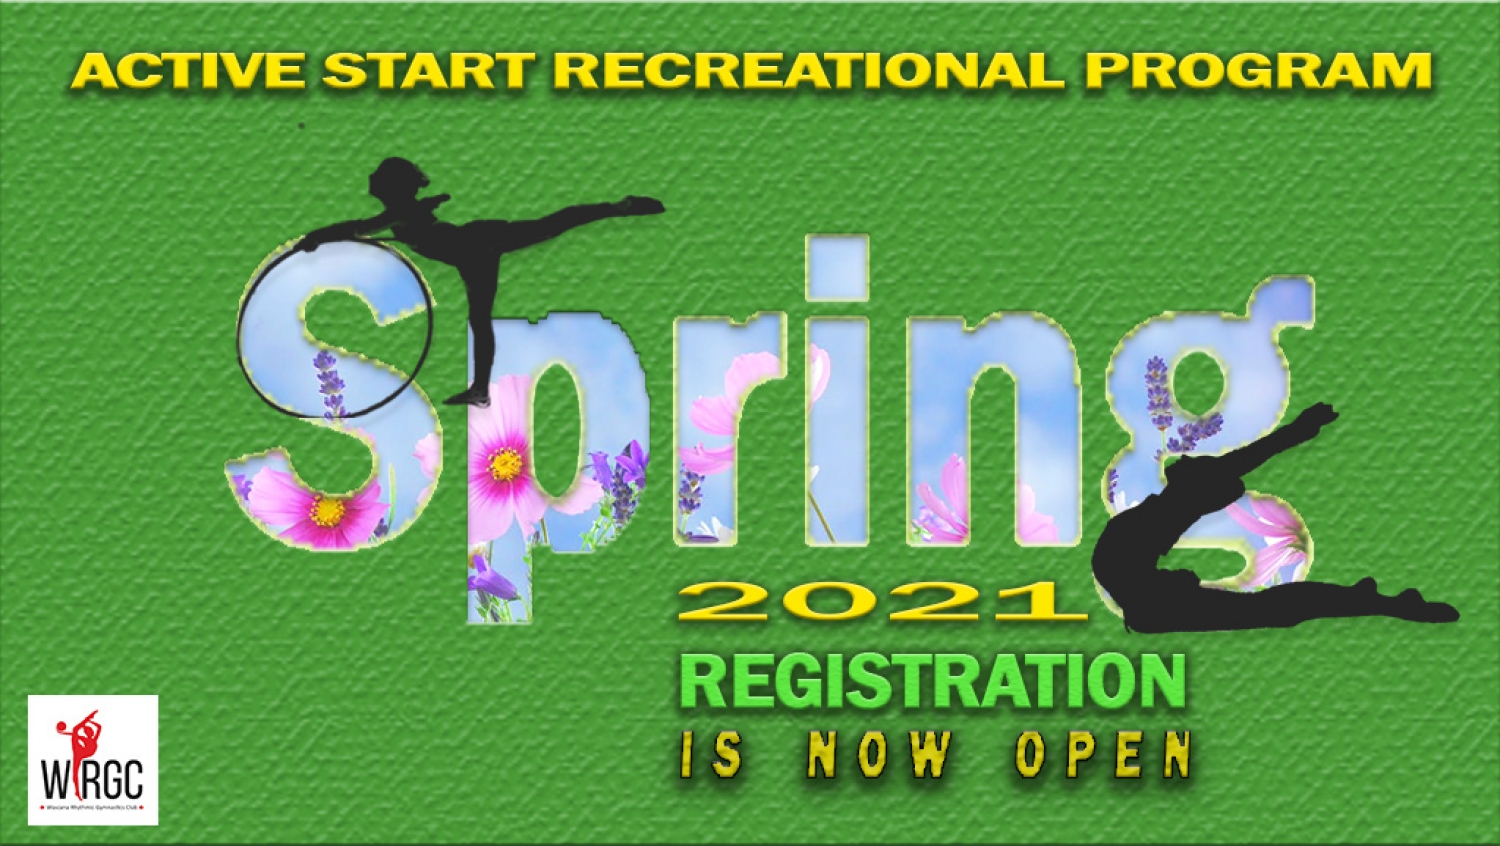 Register now for the Spring Active Start Session